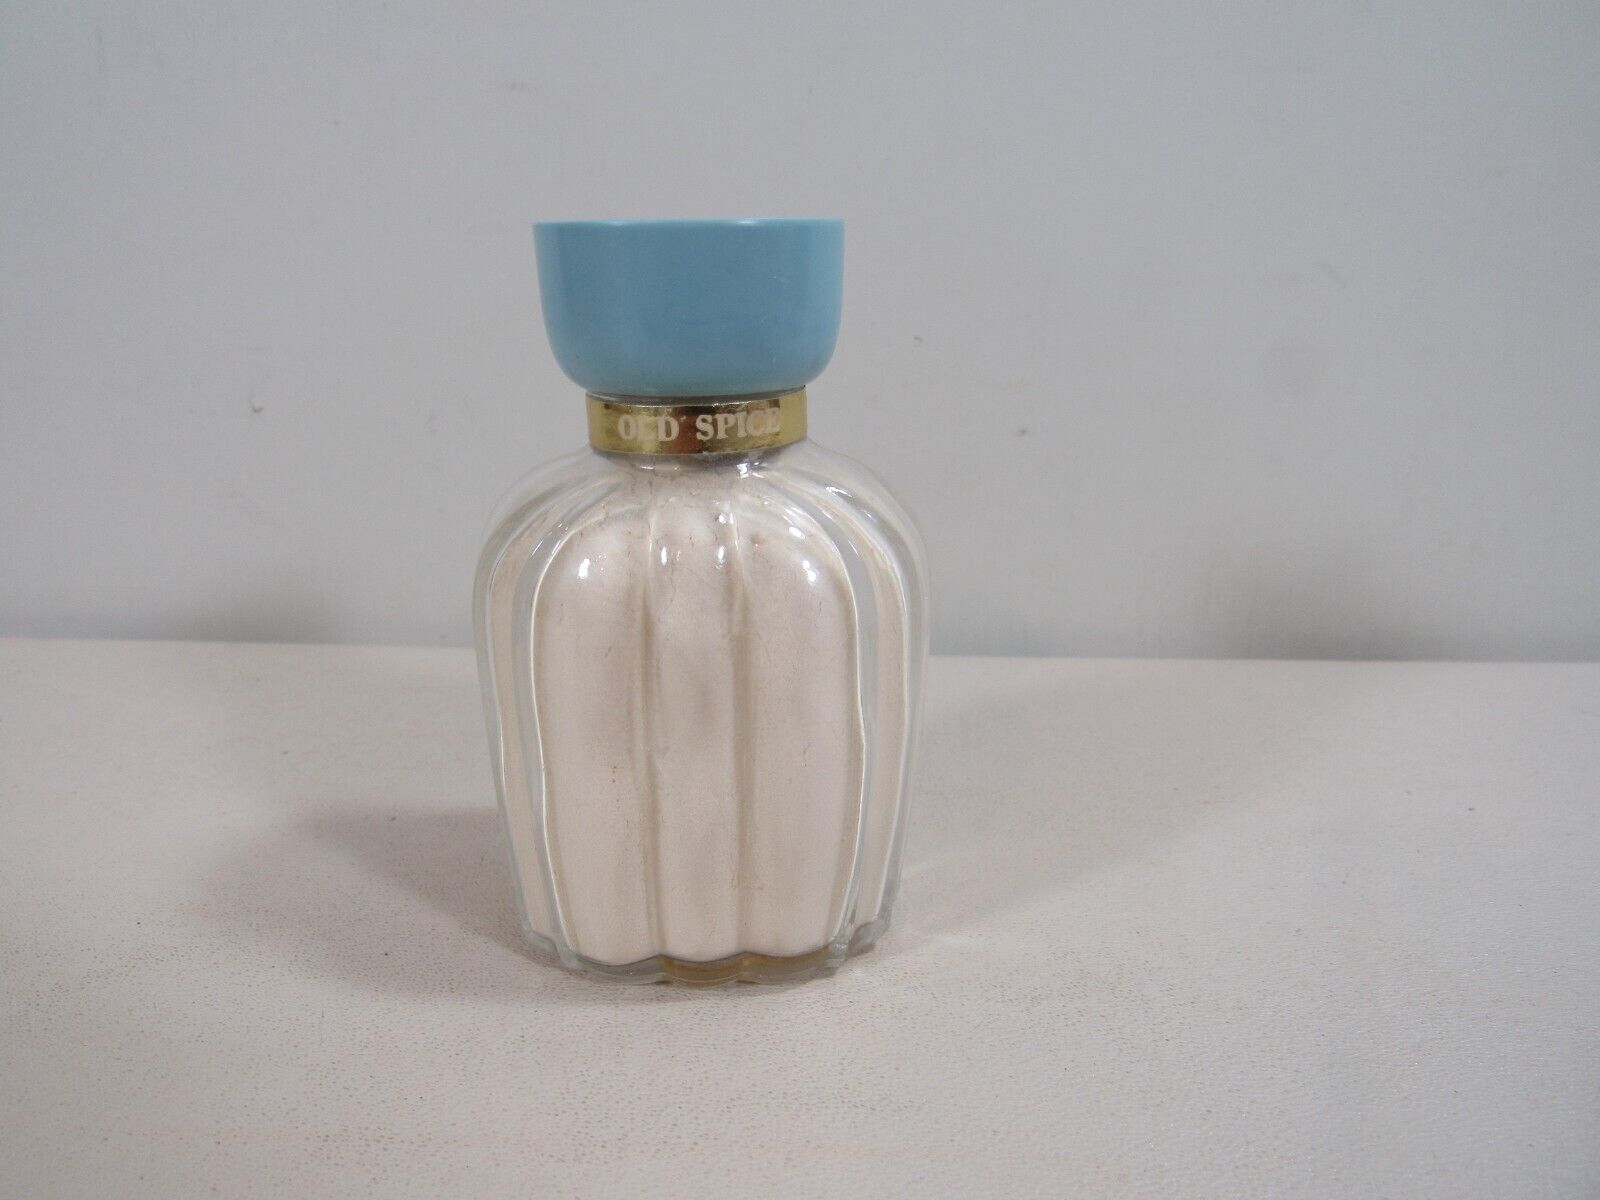 Vintage Old Spice Sachet Powder in Glass Bottle